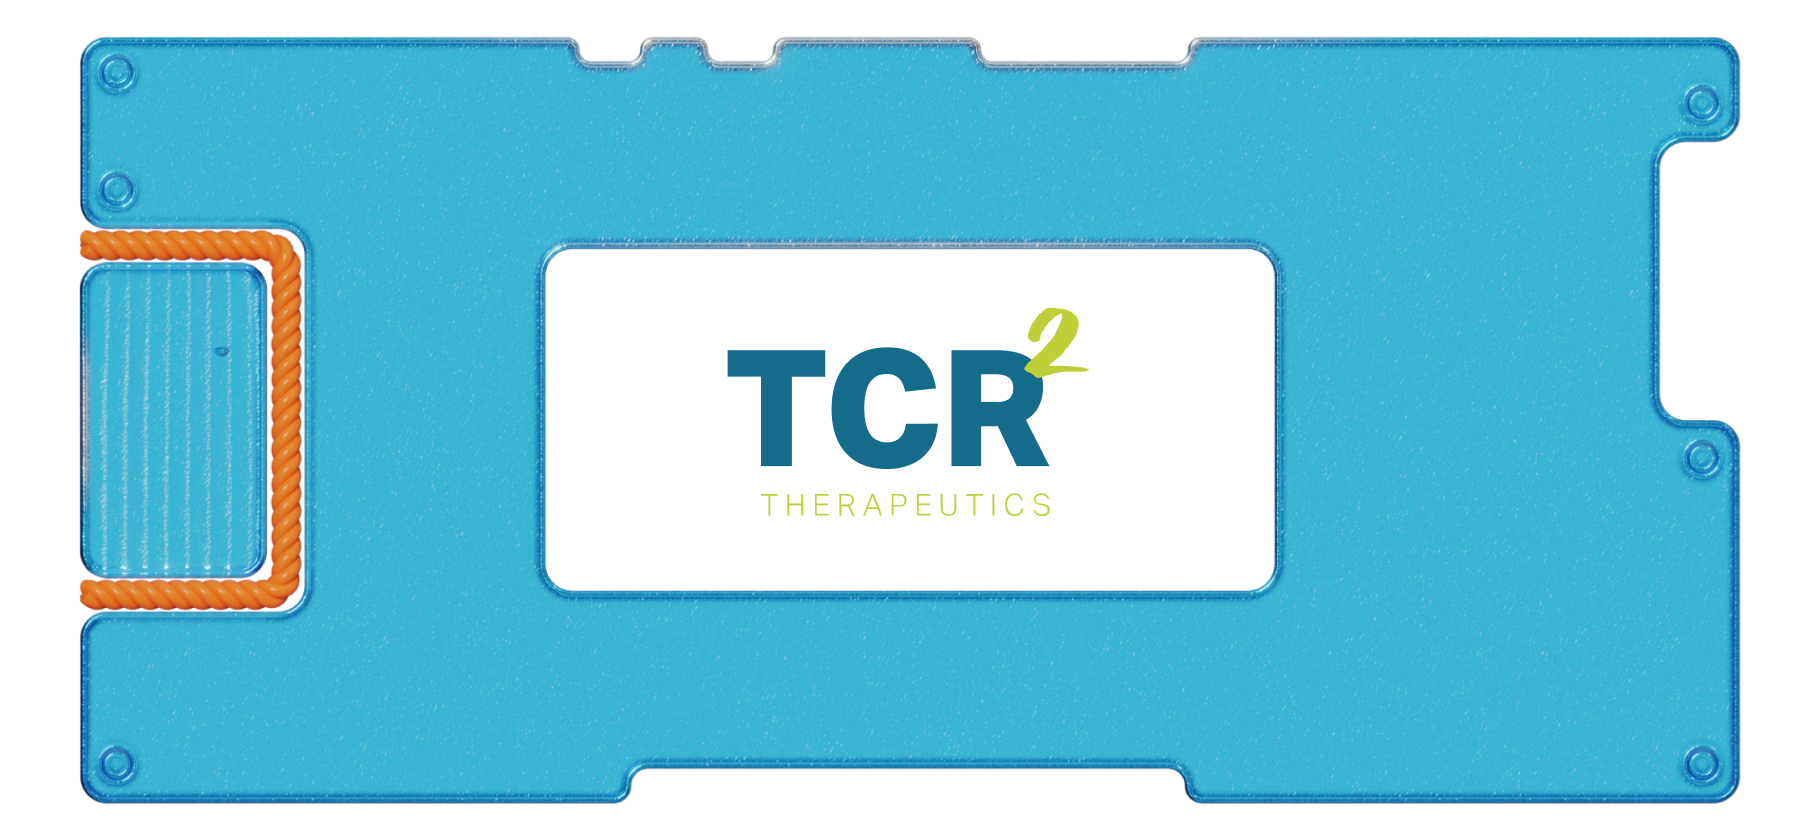 Обзор TCR2 Therapeutics: биотех против онкологических заболеваний